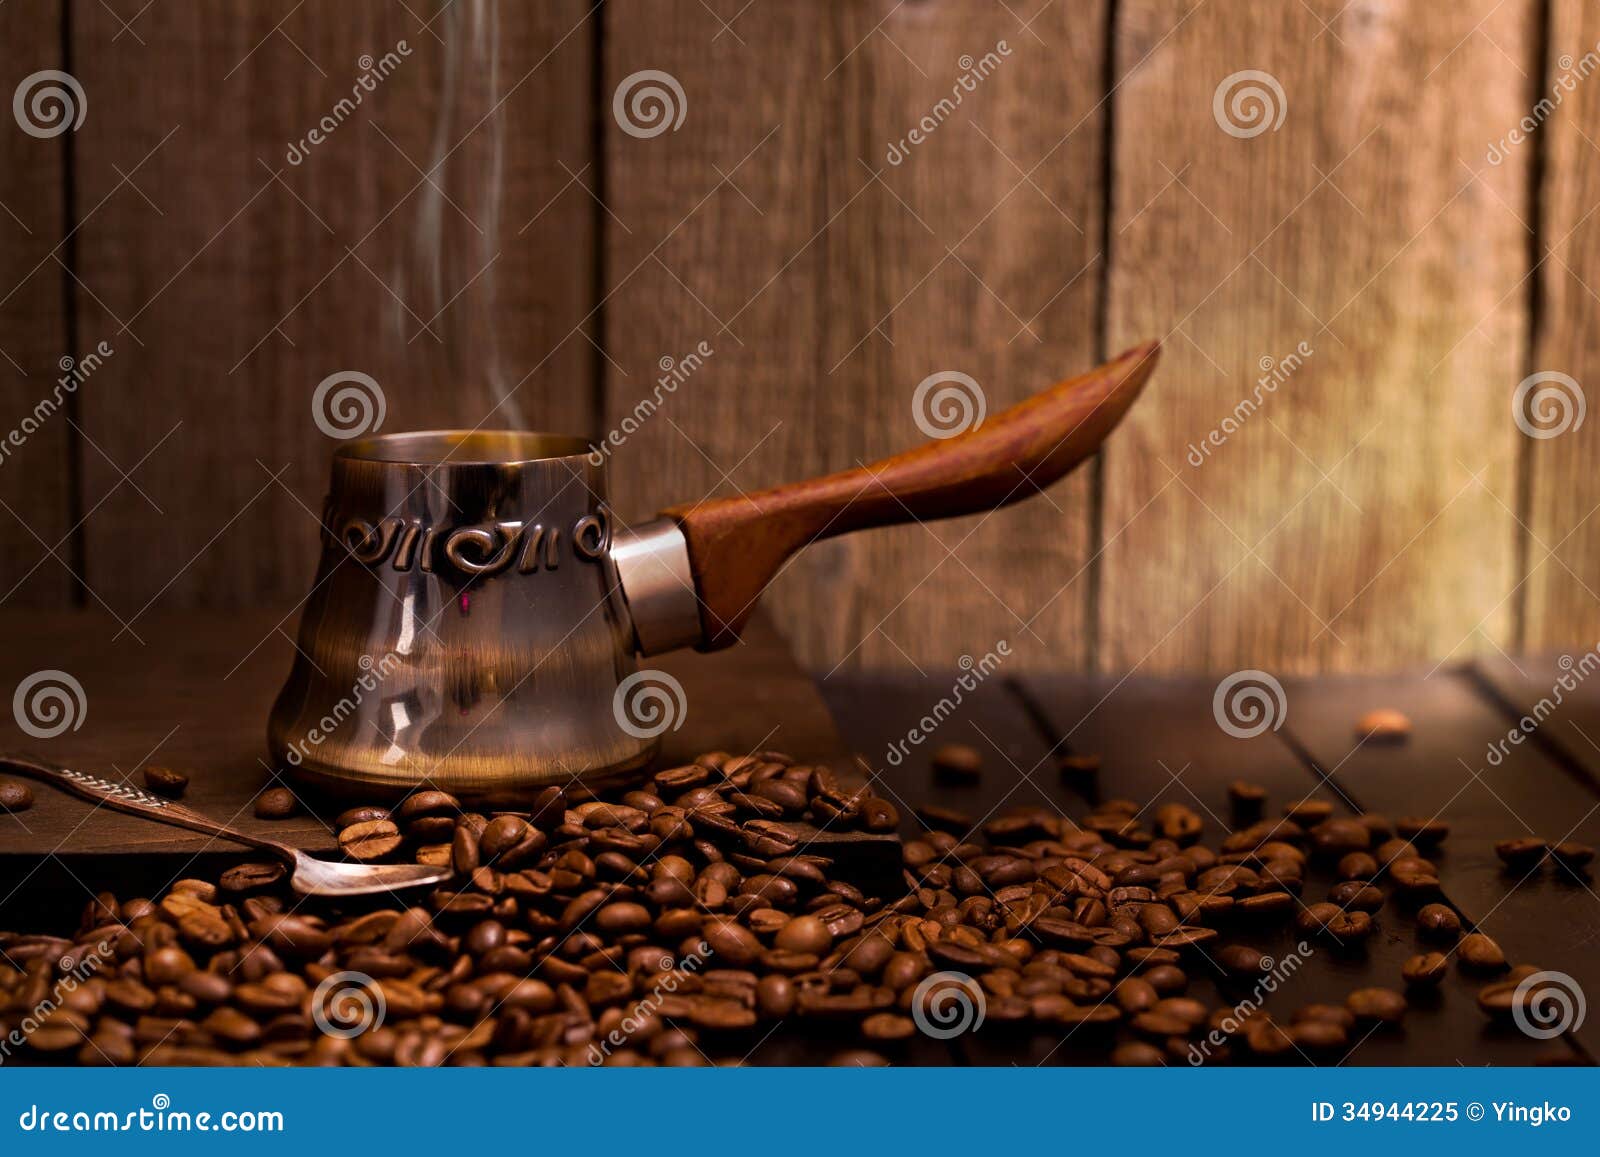 turkish coffee brewing pot